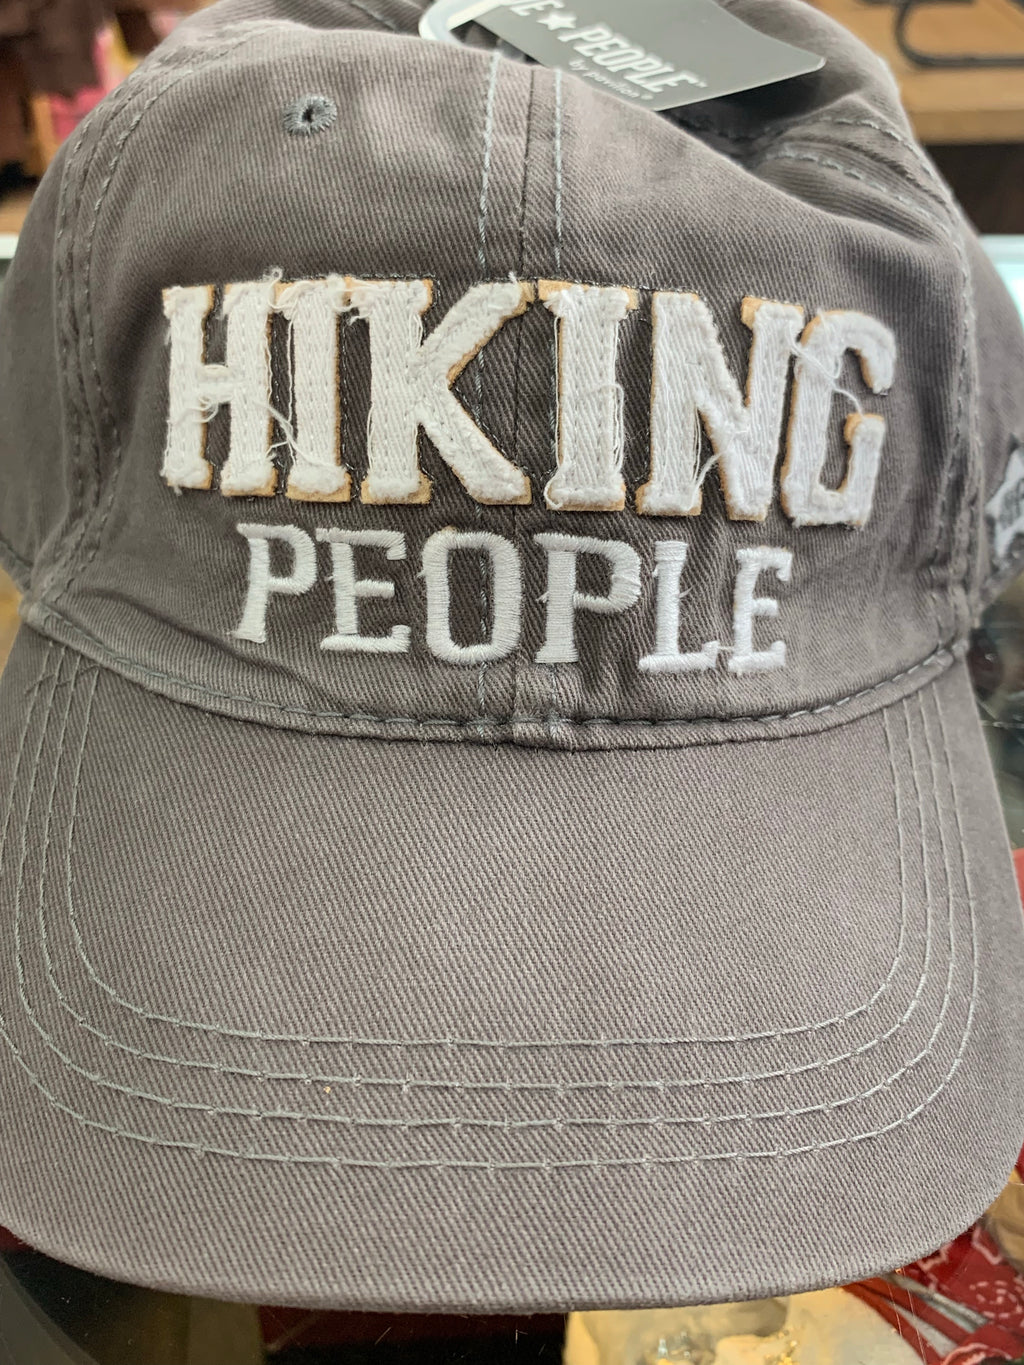 Hiking People Adjustable hat with Medora, ND